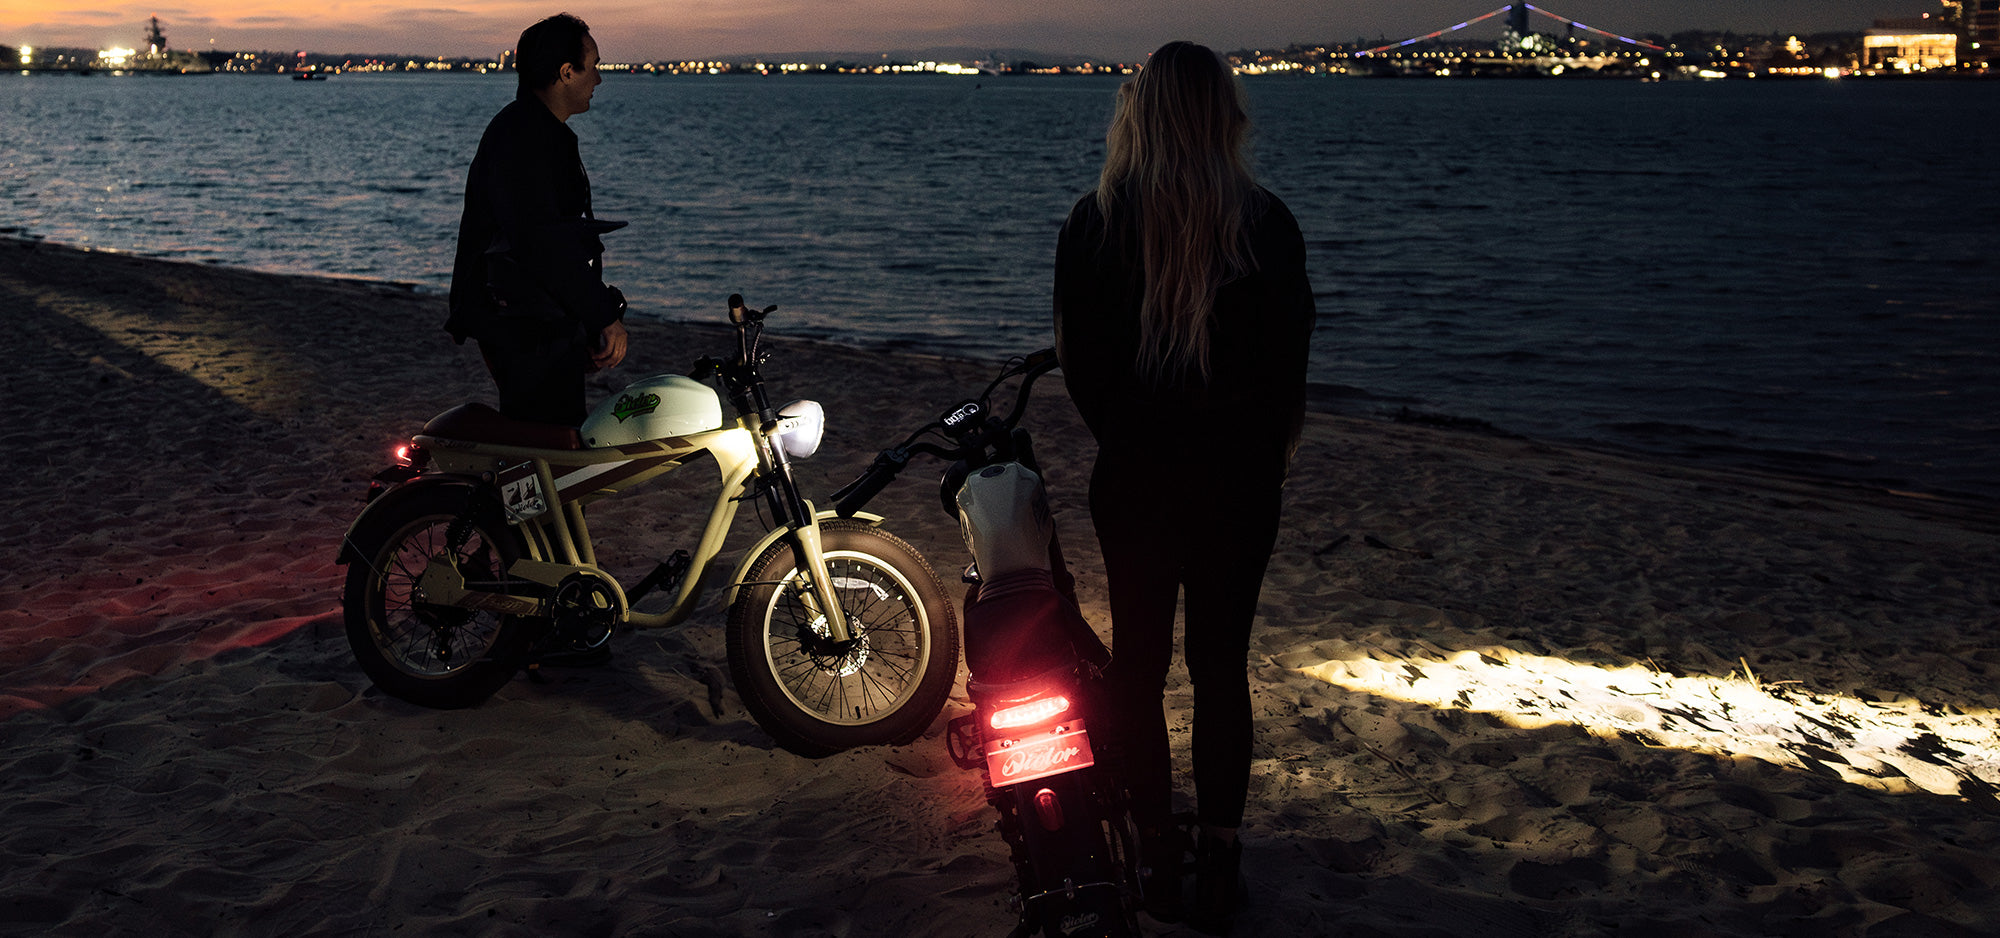 at Seaside Electric Bike | Qiolor